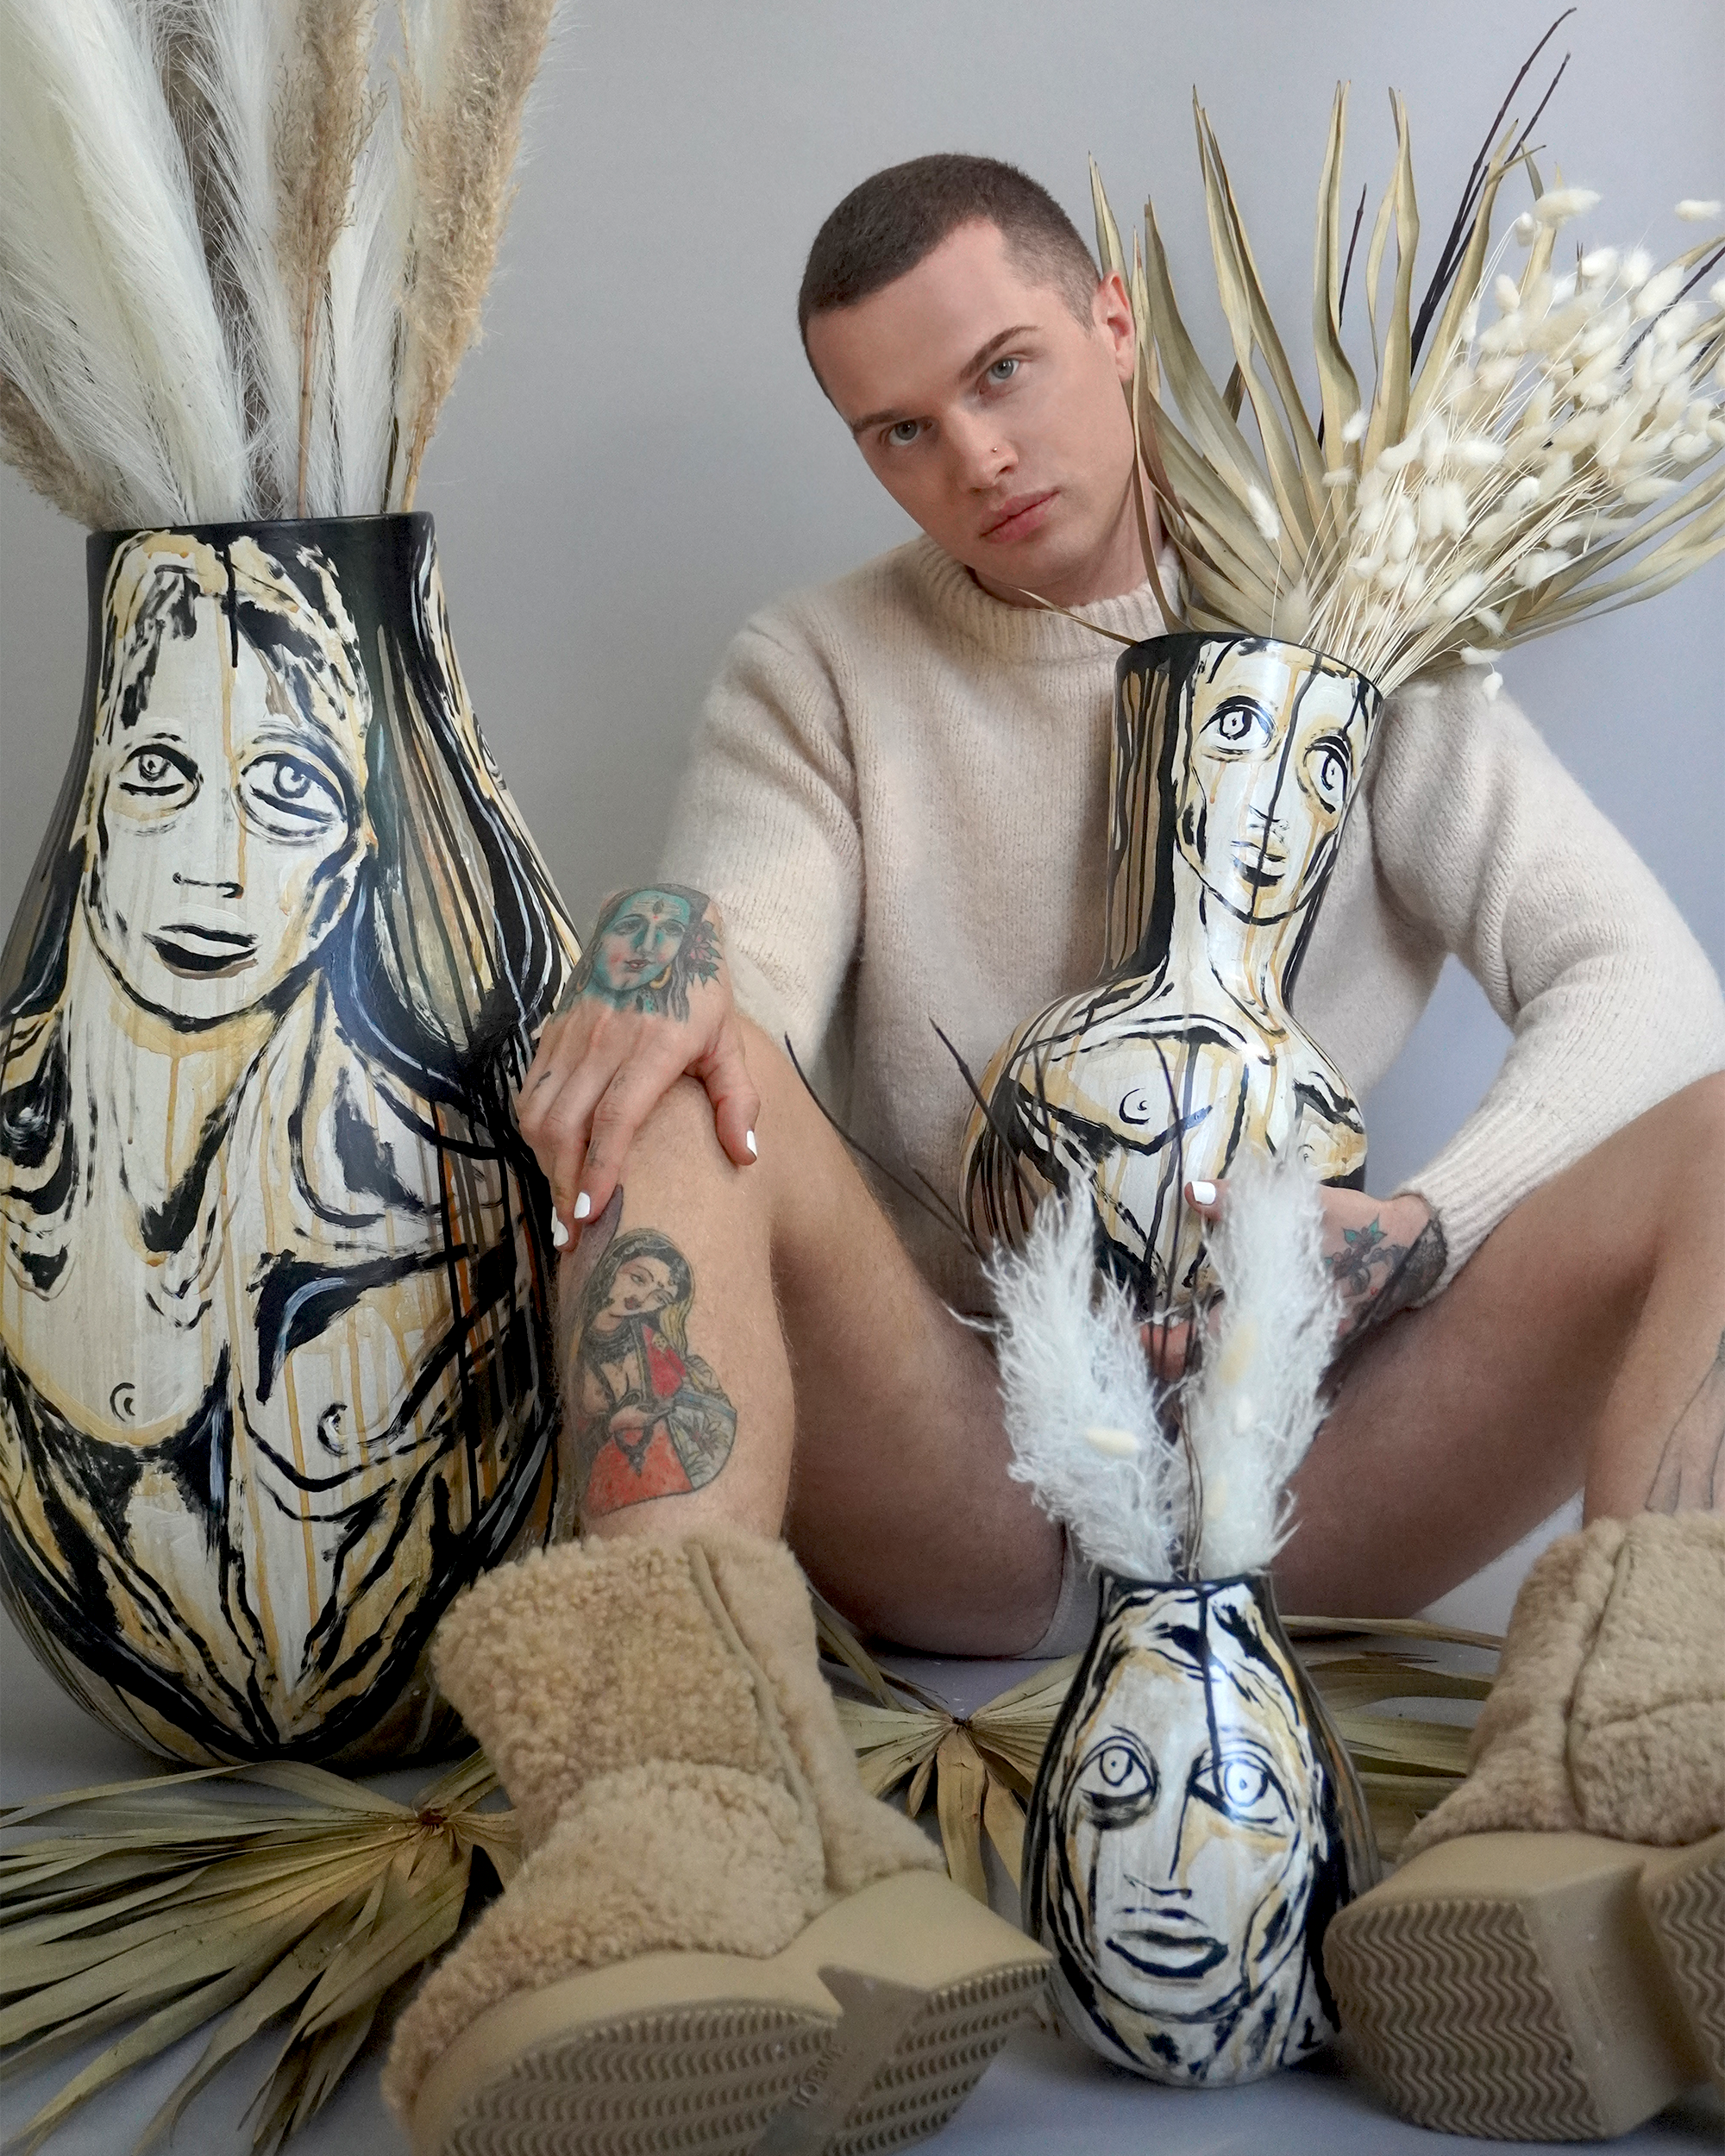 'Dearest Boy' Vases - Patrick Church